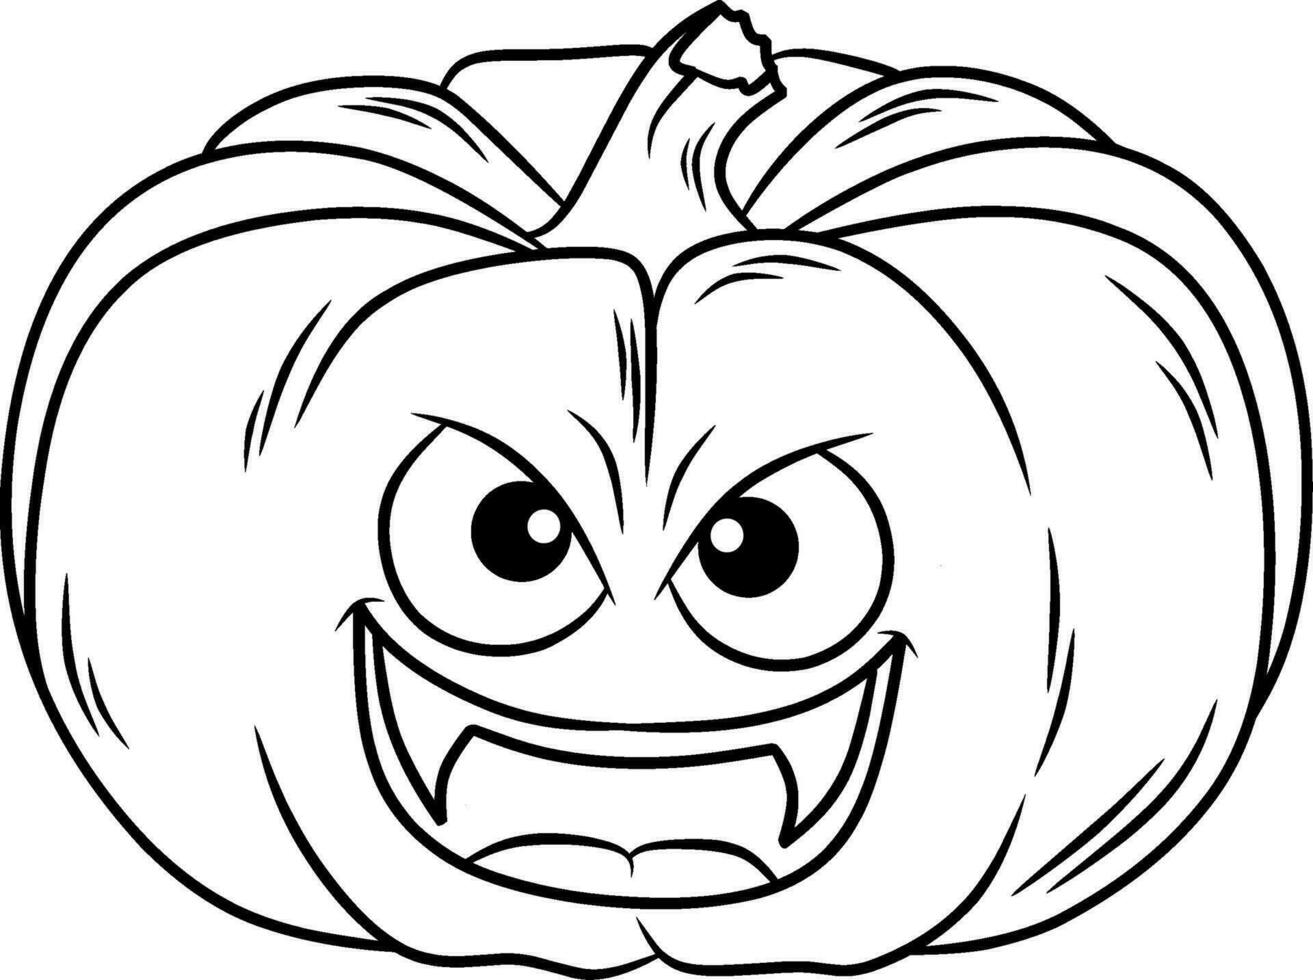 Pumpkin Halloween Line art for coloring book page vector